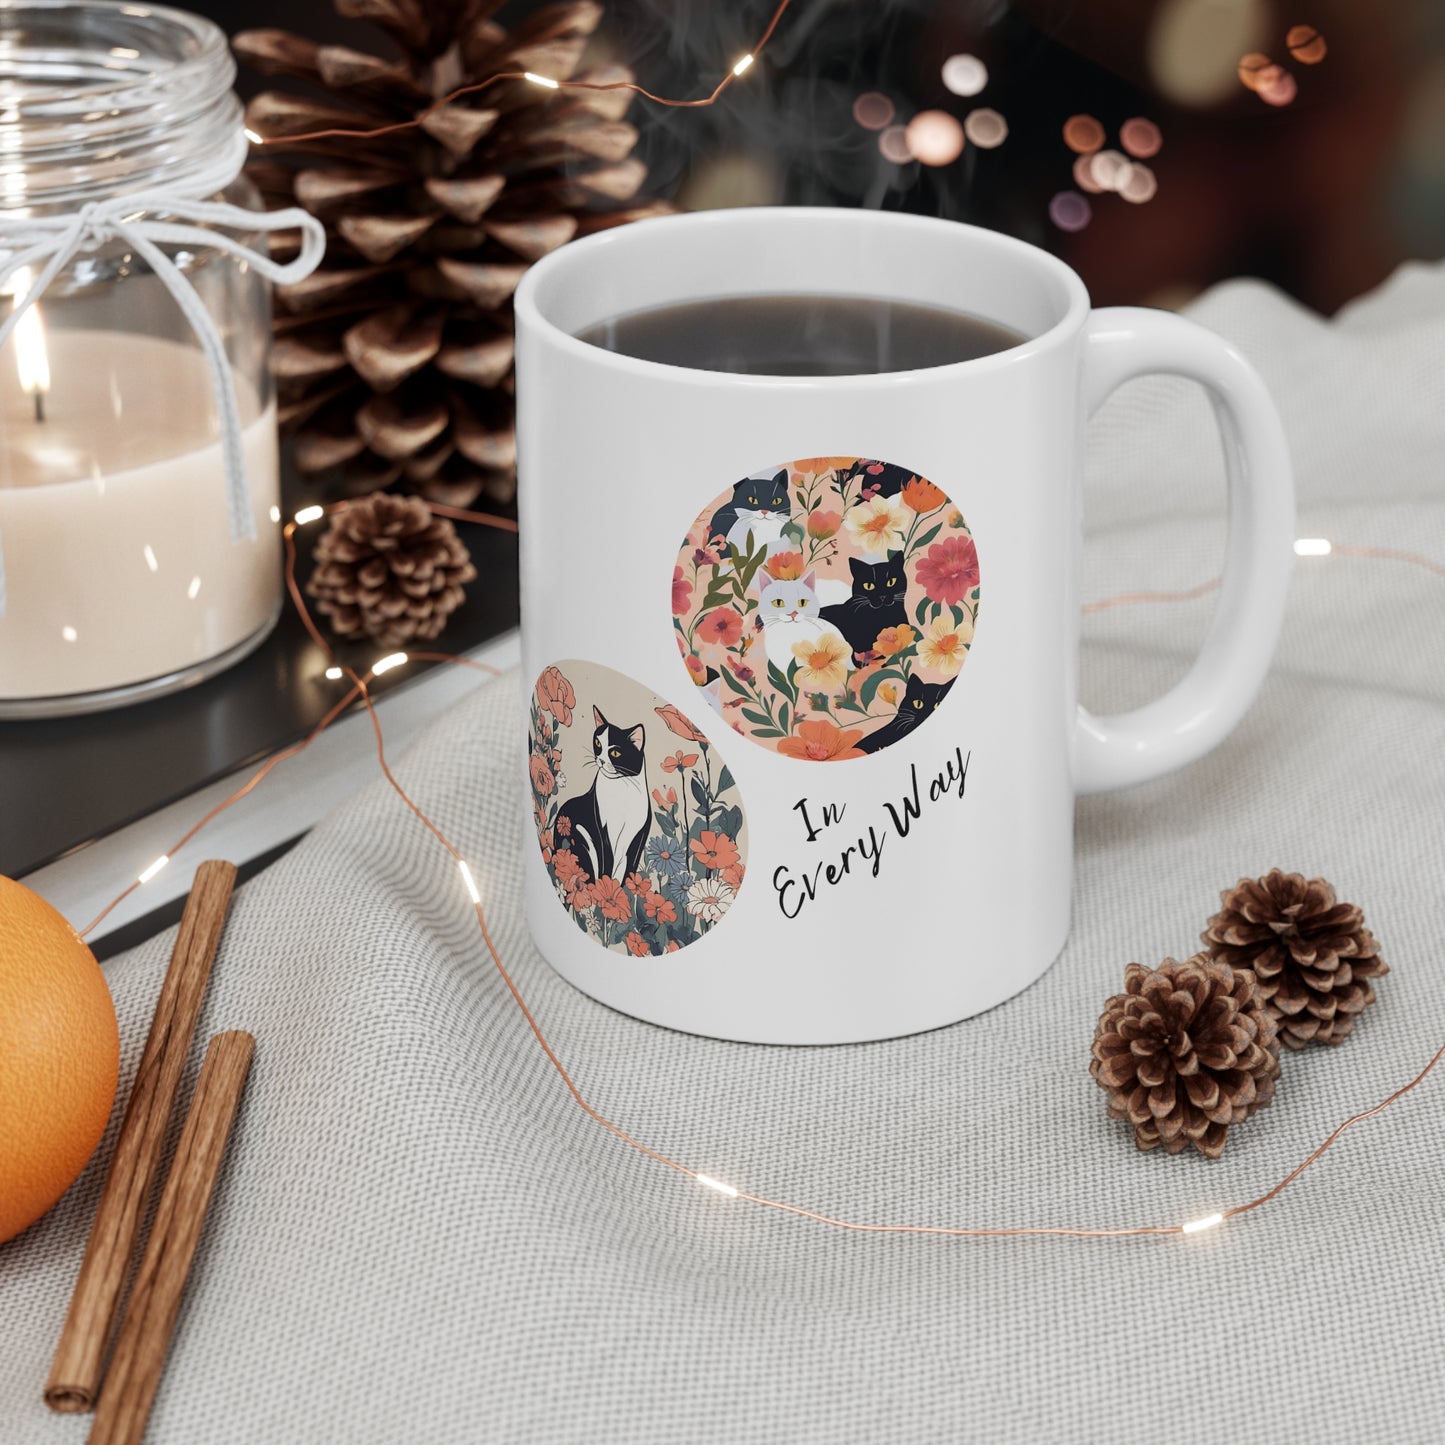 Cat Lady Coffee Mug - "Have a Zen Day" Floral Motif - Ceramic - 11oz